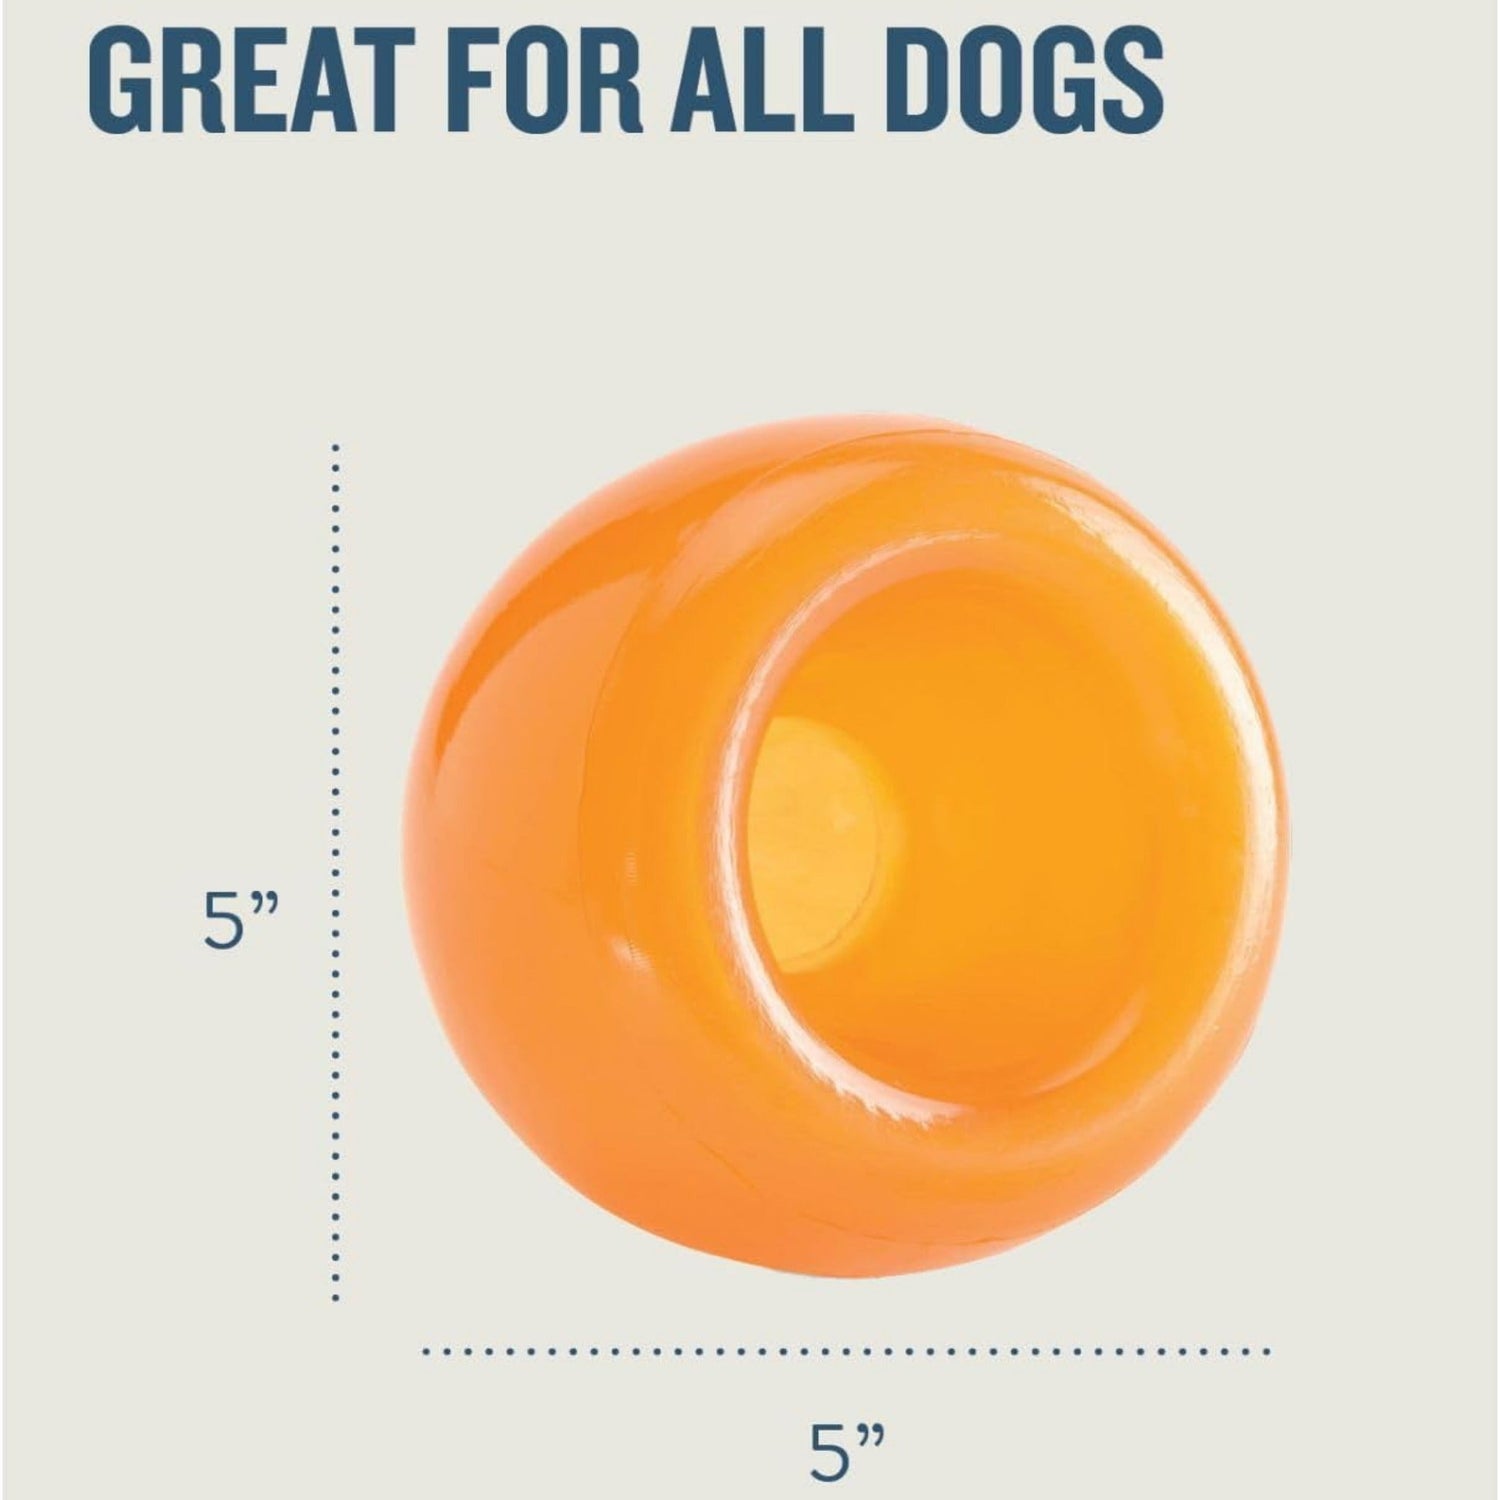 Planet Dog Orbee-Tuff Snoop Interactive Treat Dispensing Dog Toy, Orange,  Large 